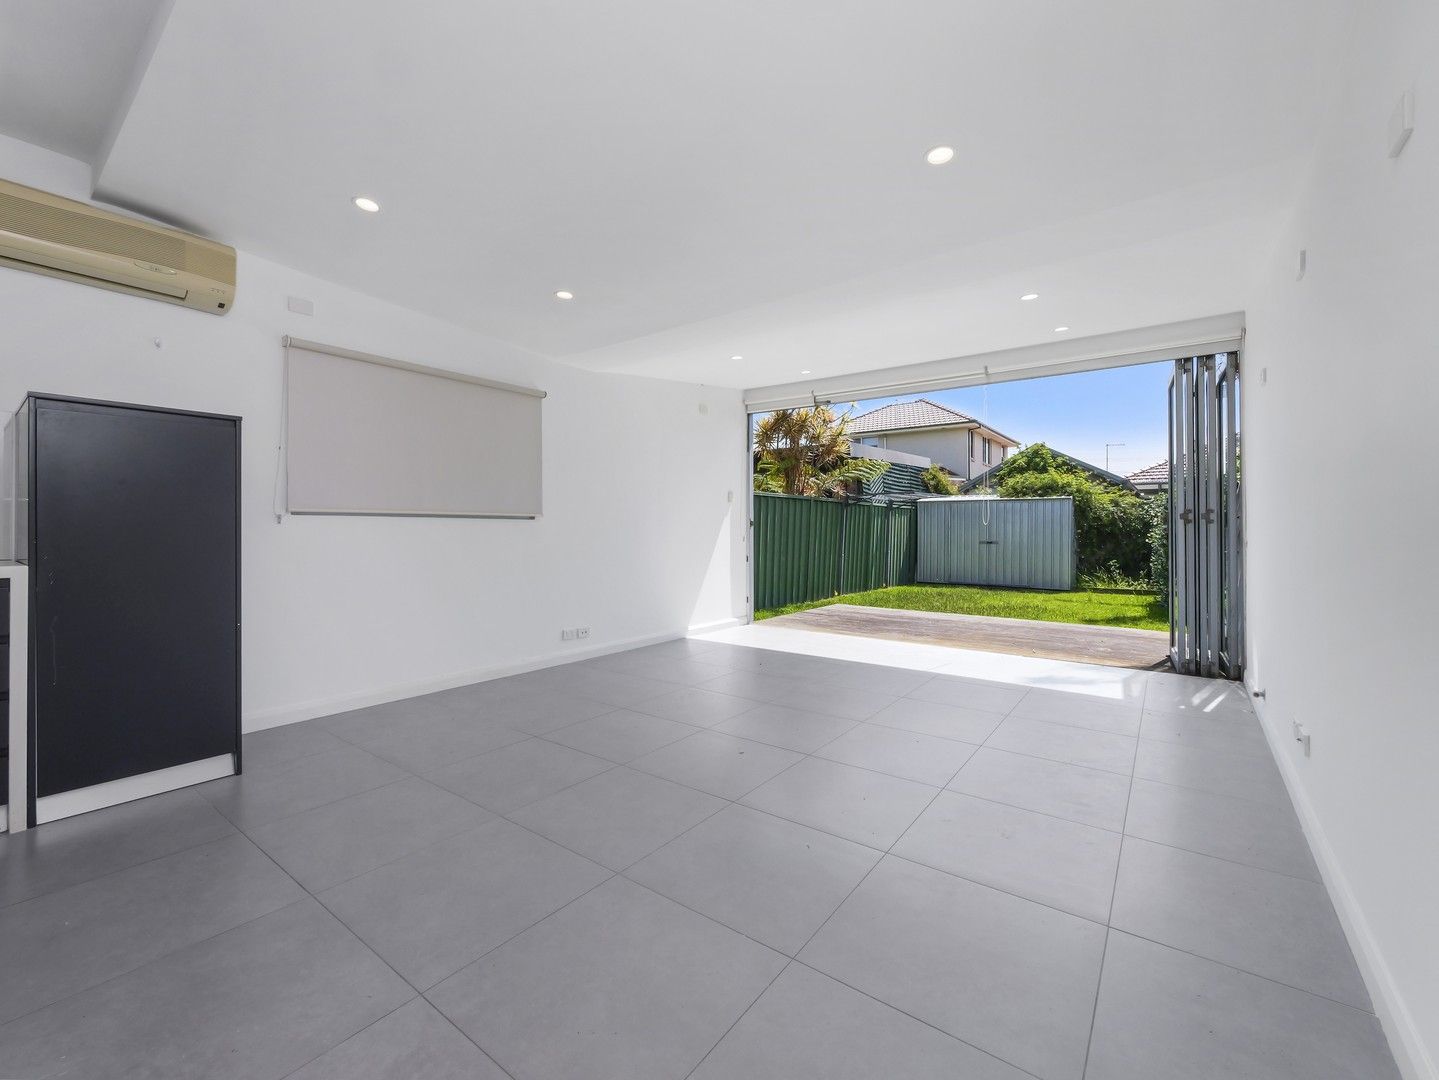 2 bedrooms House in 40 Napoleon St MASCOT NSW, 2020